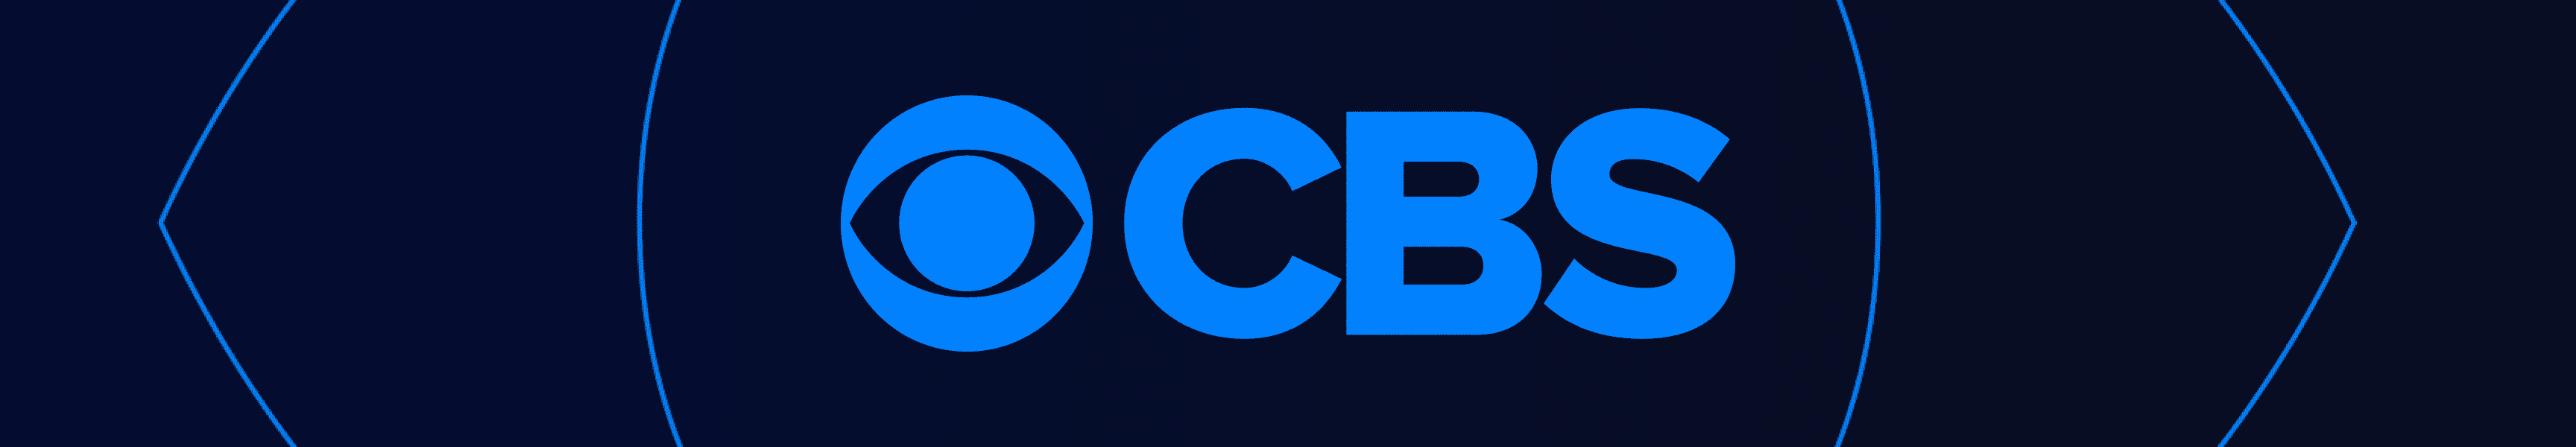 CBS Entertainment Autocollants